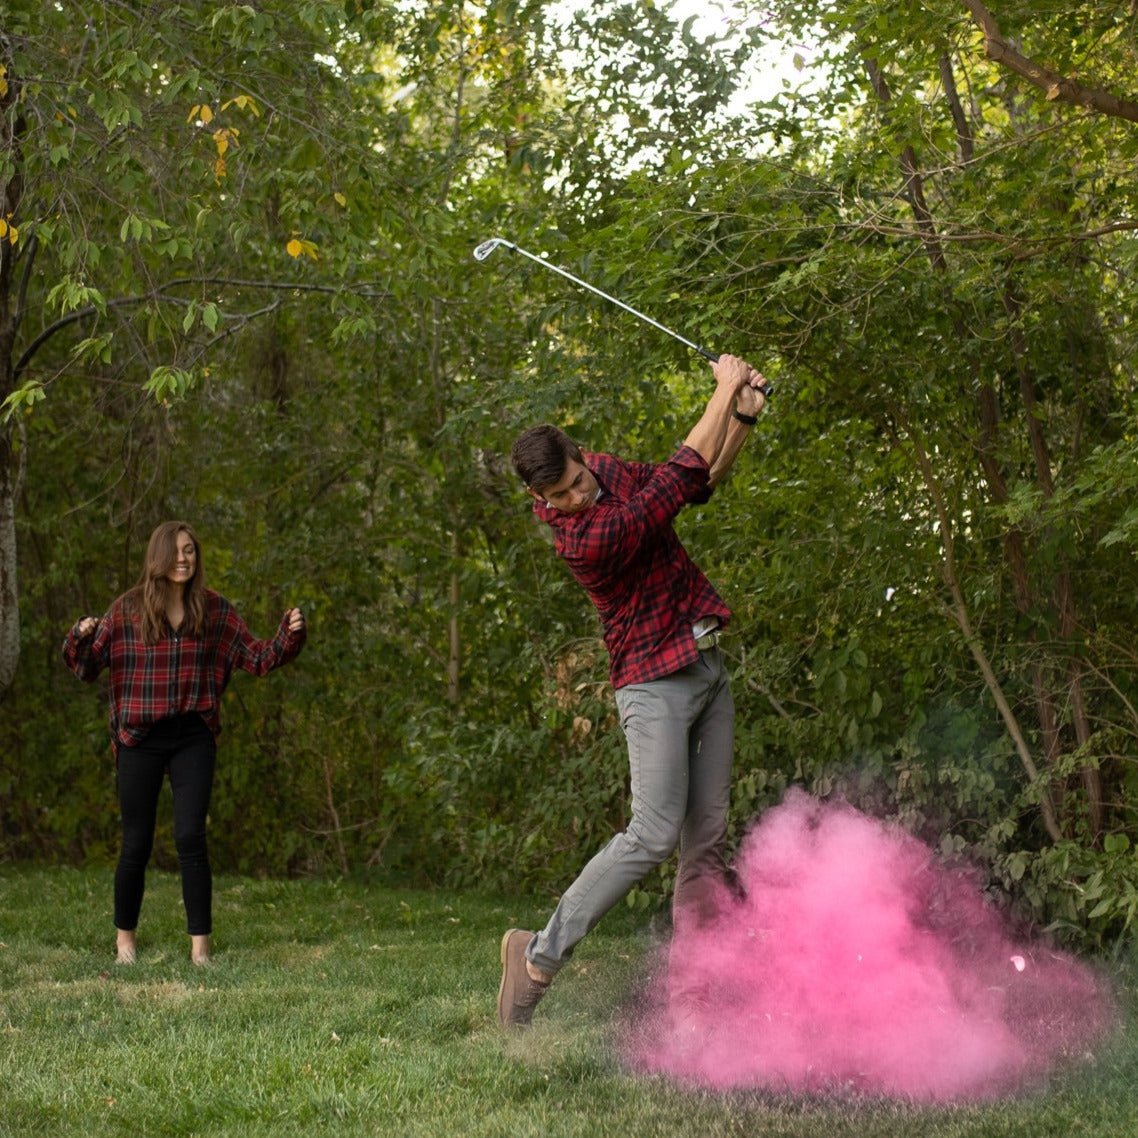 Gender Reveal Exploding Golf Ball Golf Theme Blue Pink Powder